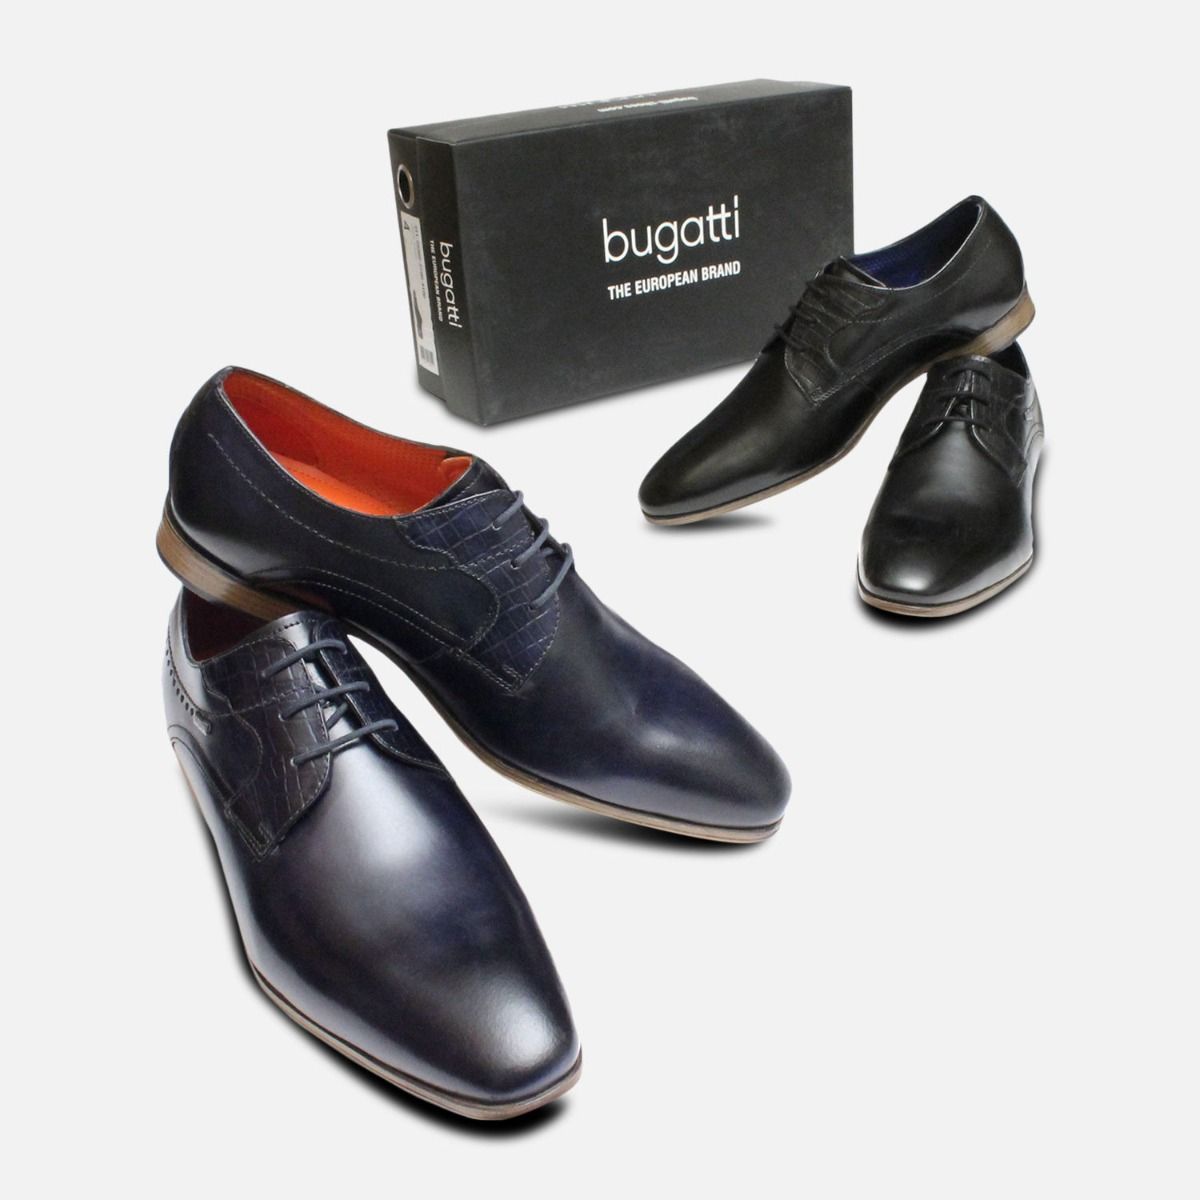 bugatti footwear